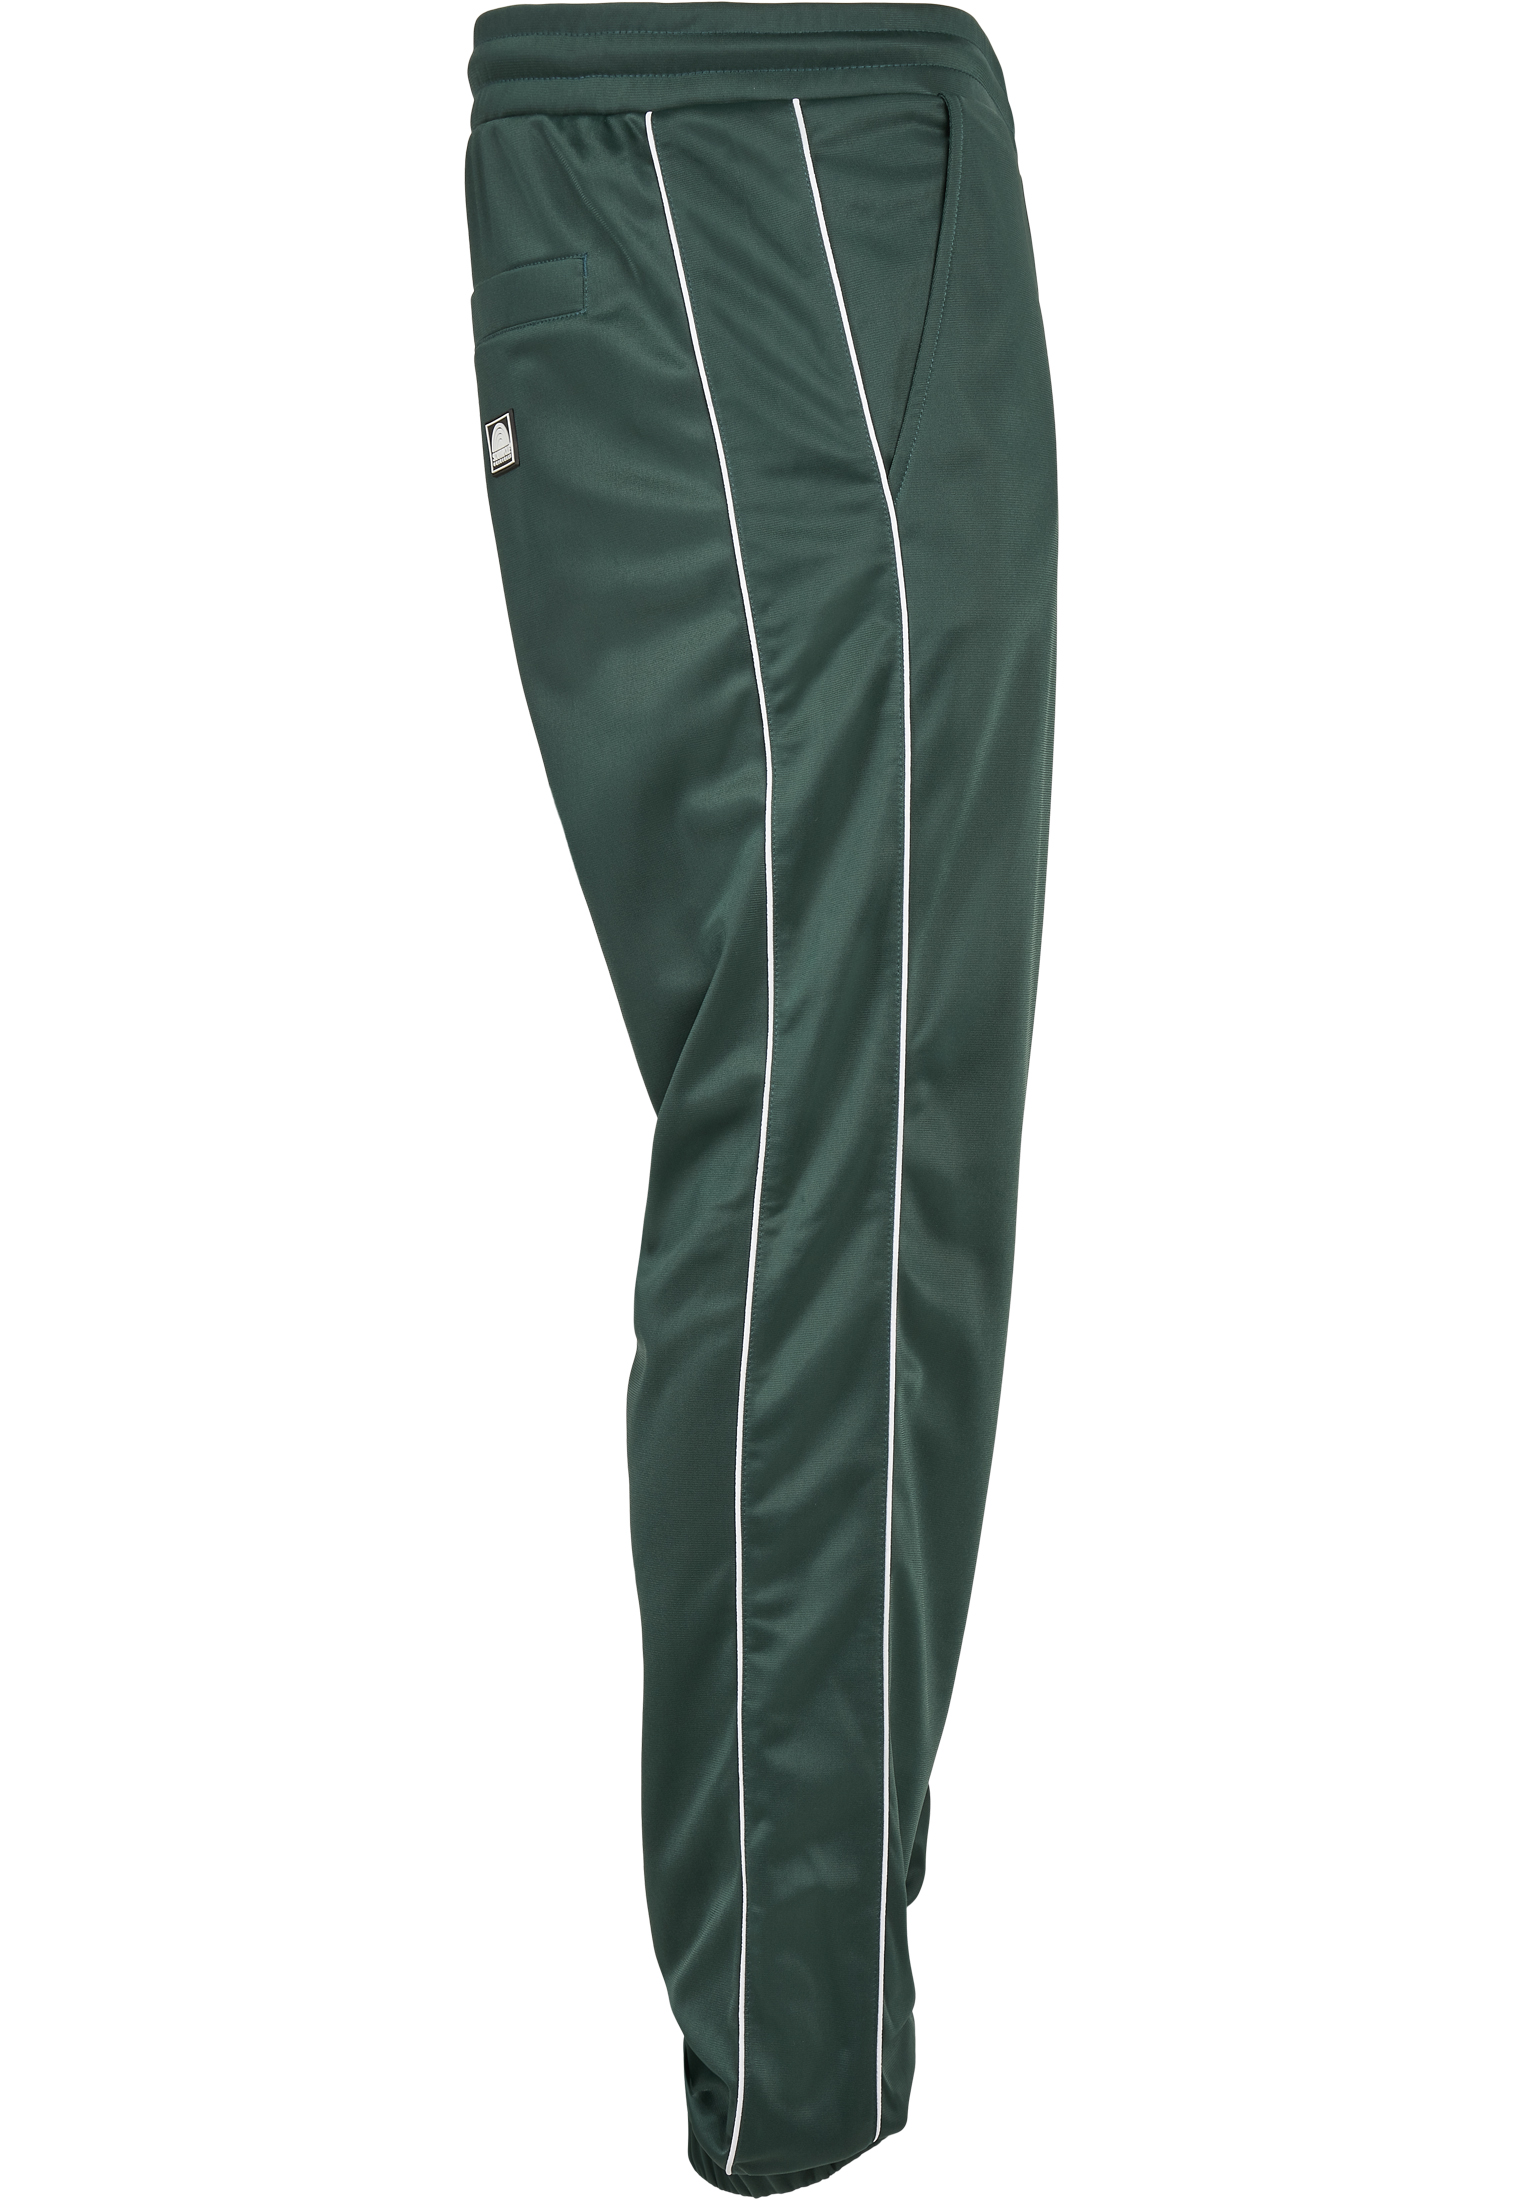 Saisonware Southpole Tricot Pants in Farbe darkfreshgreen